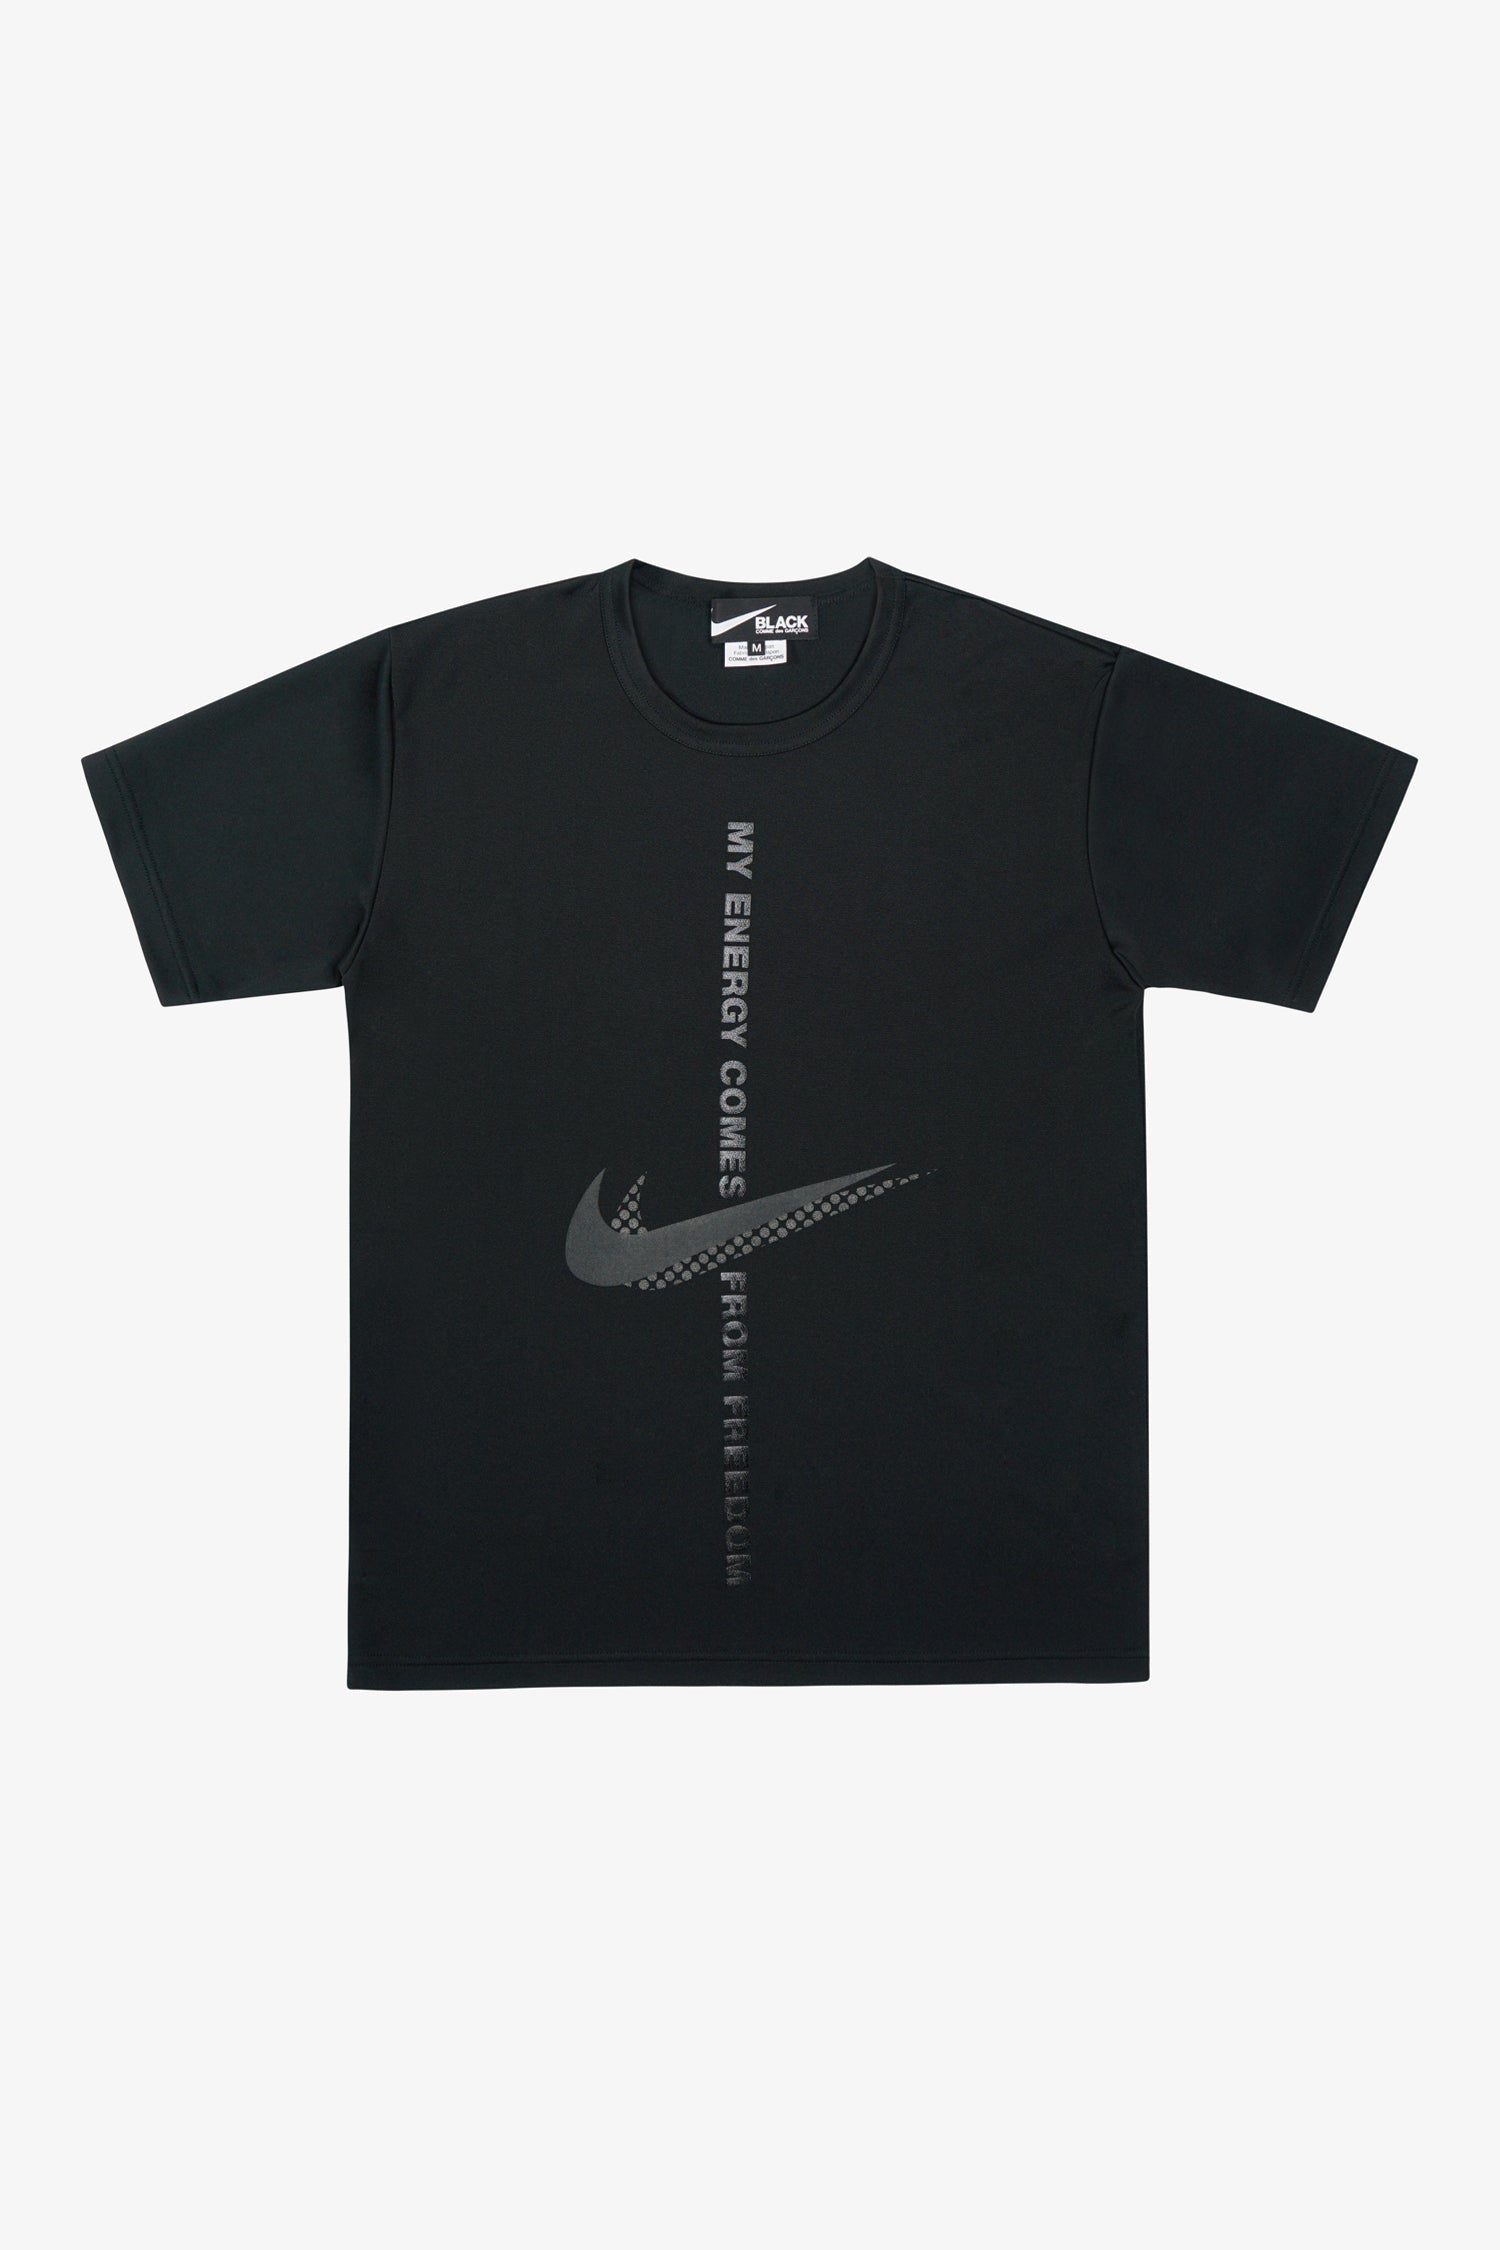 Selectshop FRAME - COMME DES GARÇONS BLACK Nike My Energy T-Shirt T-Shirts Dubai